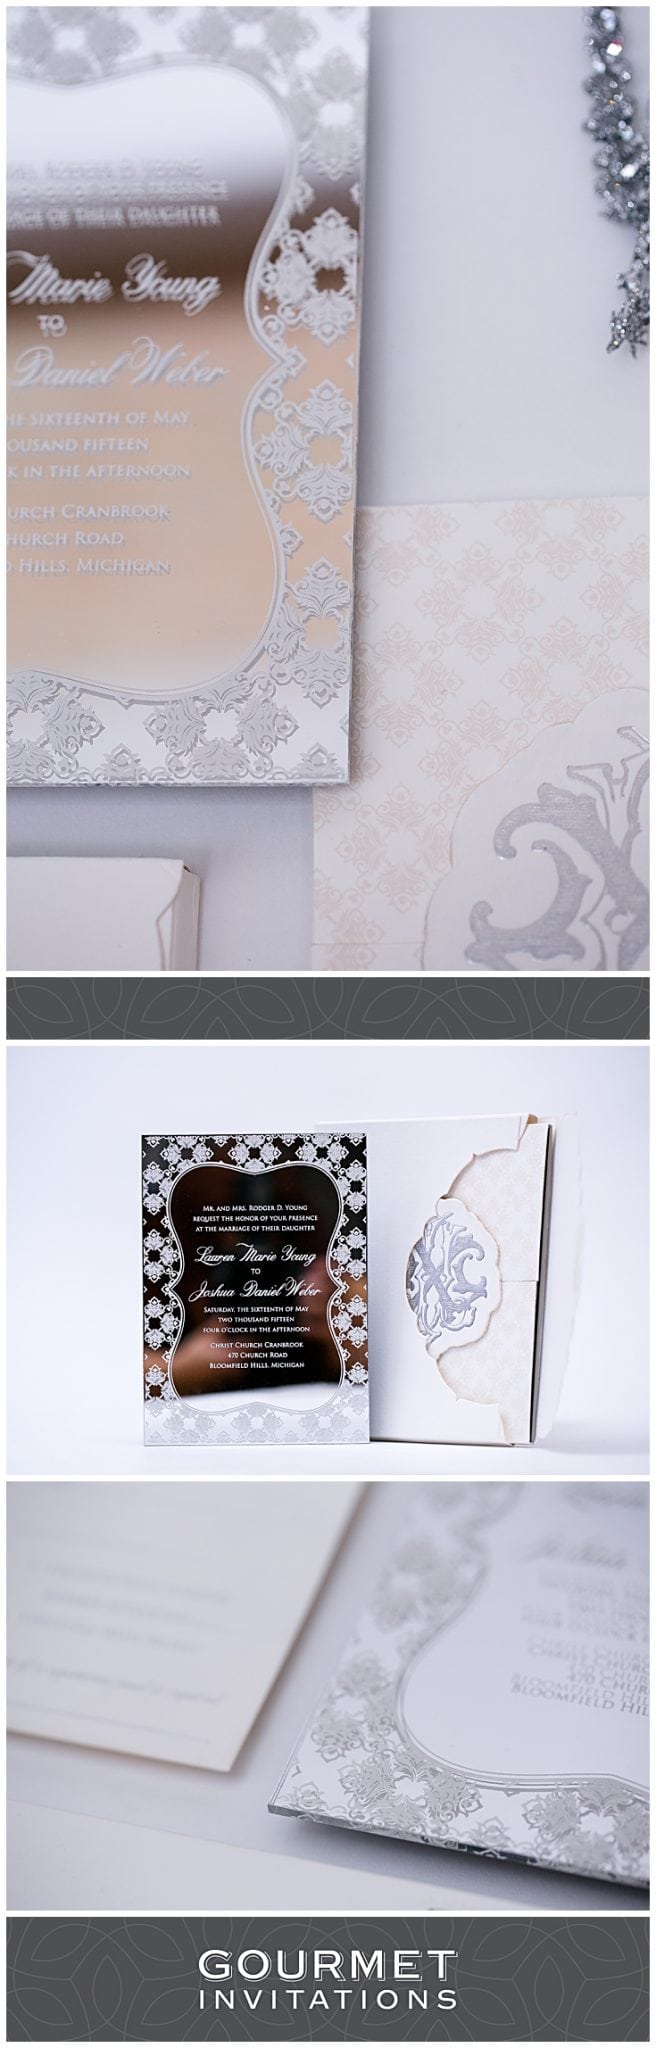 mirror-wedding-invitations_0003